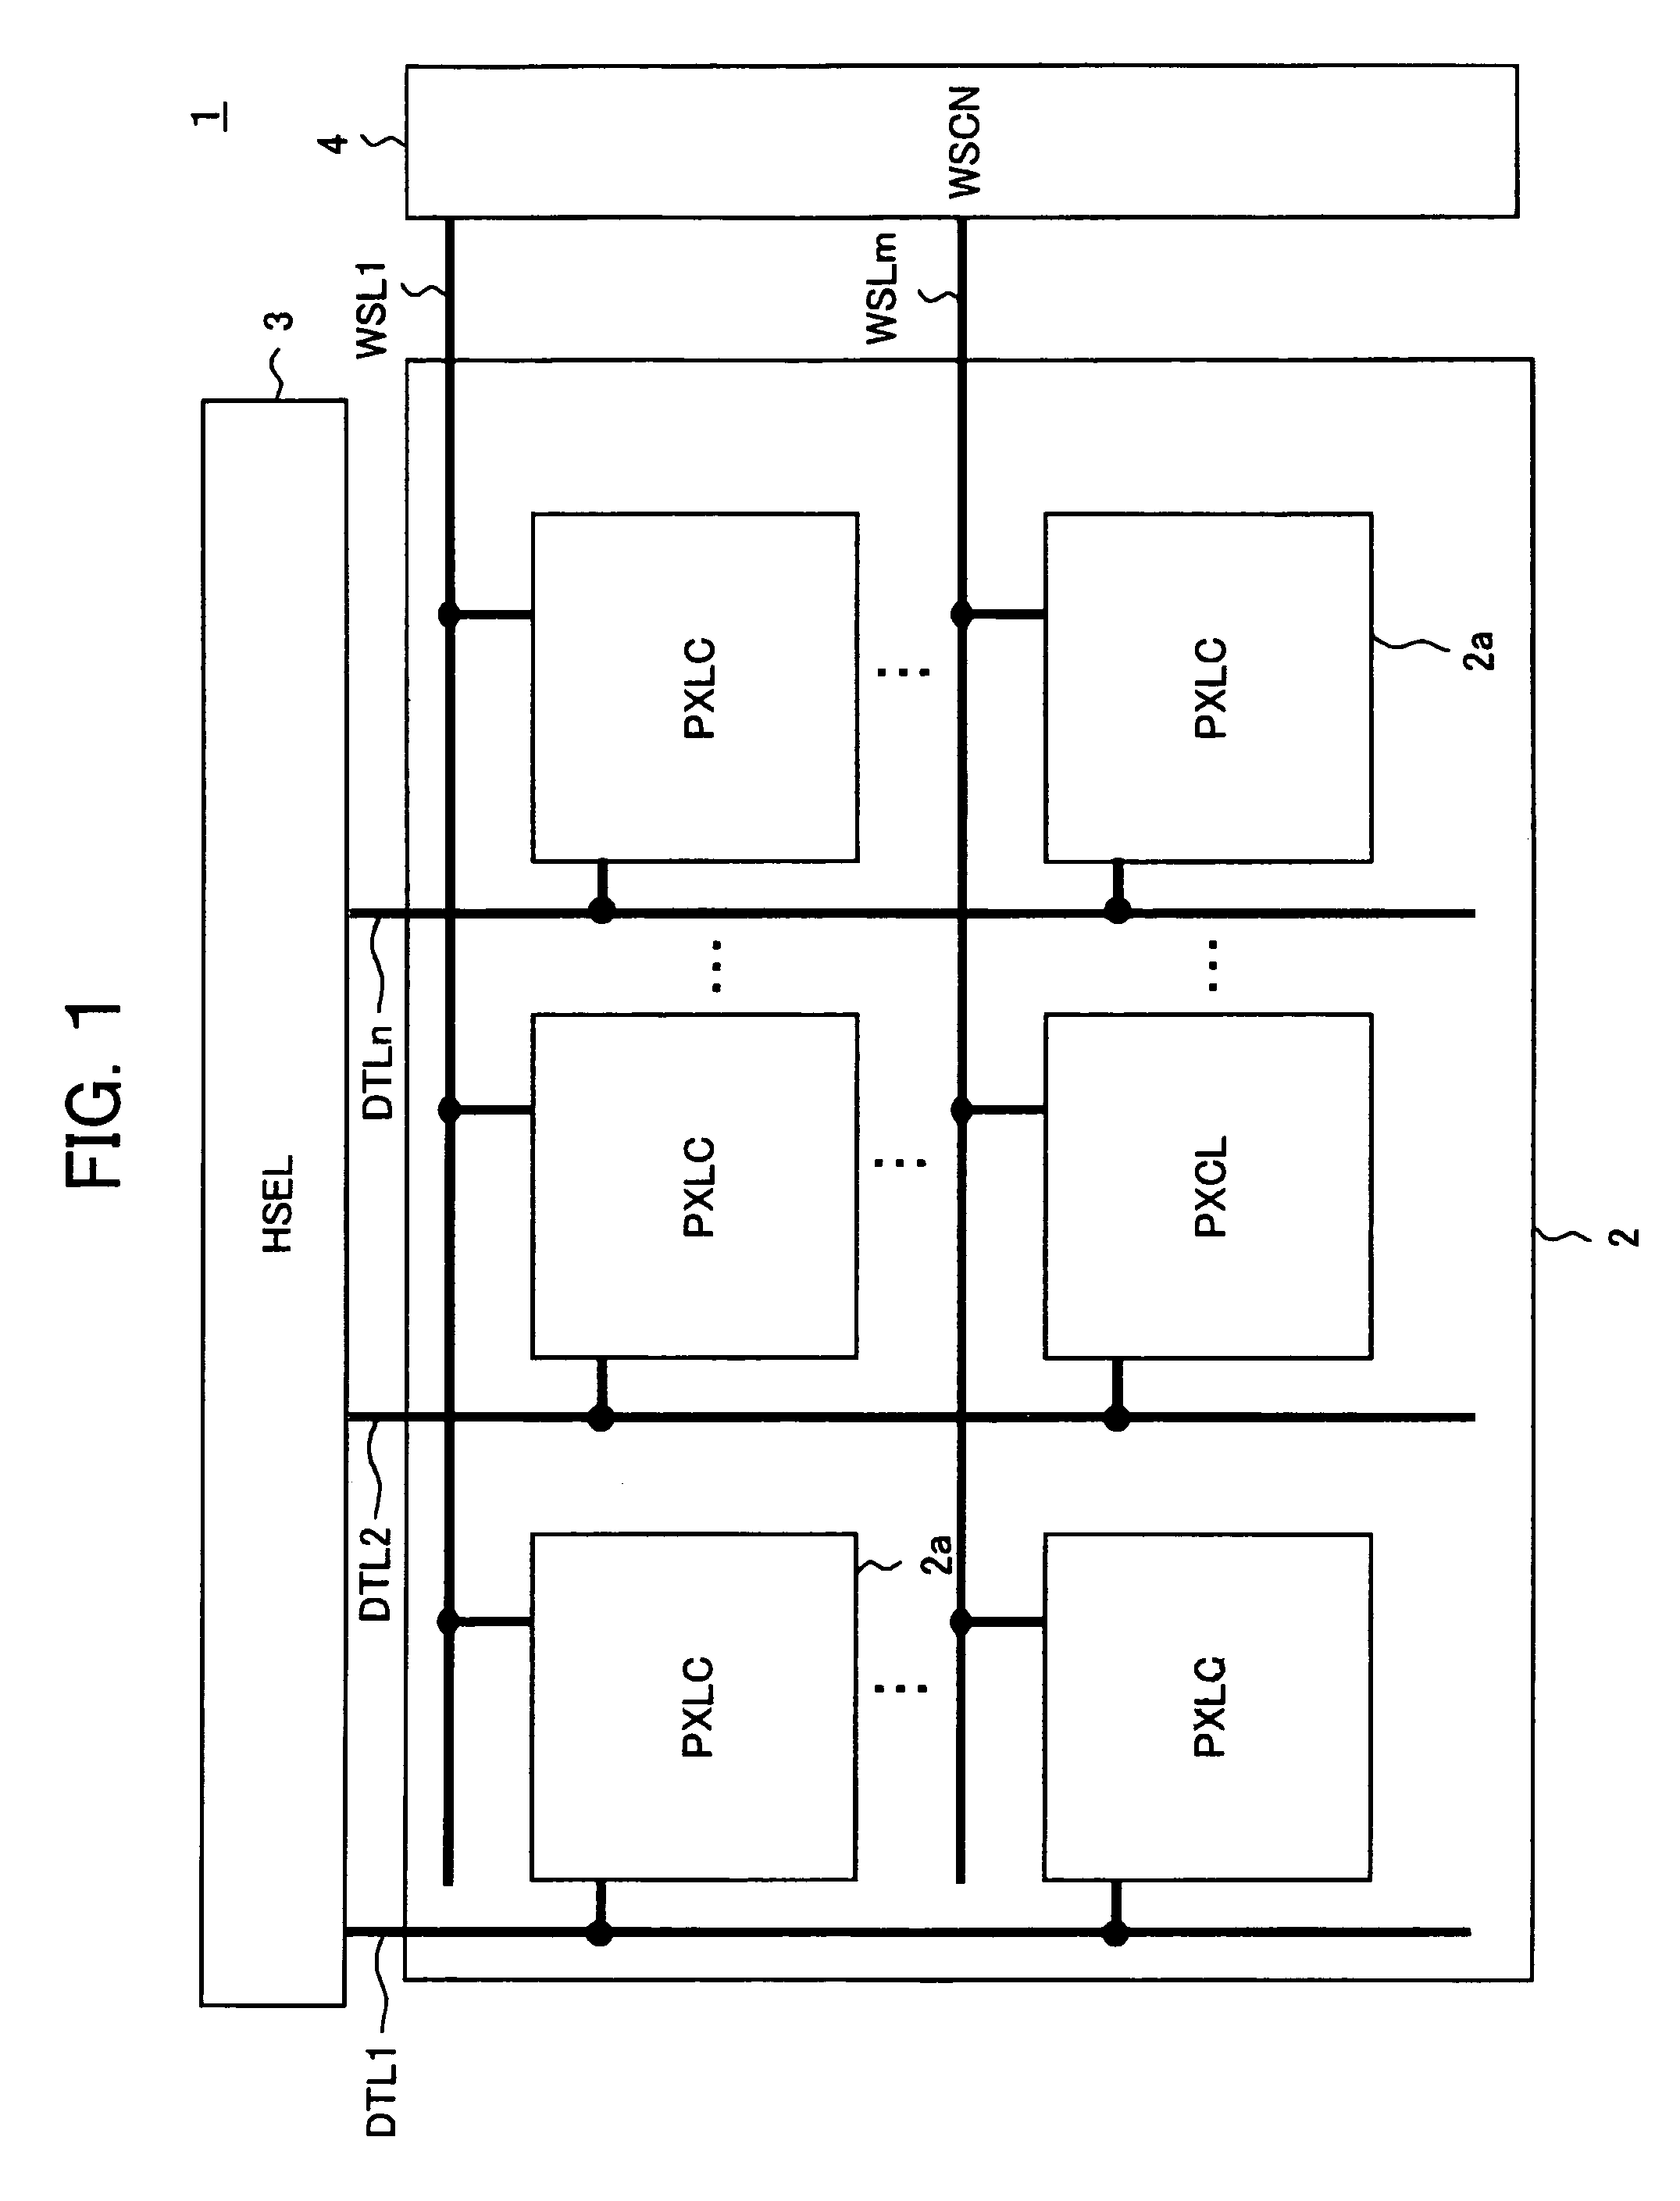 Pixel circuit, display device, and method of driving pixel circuit